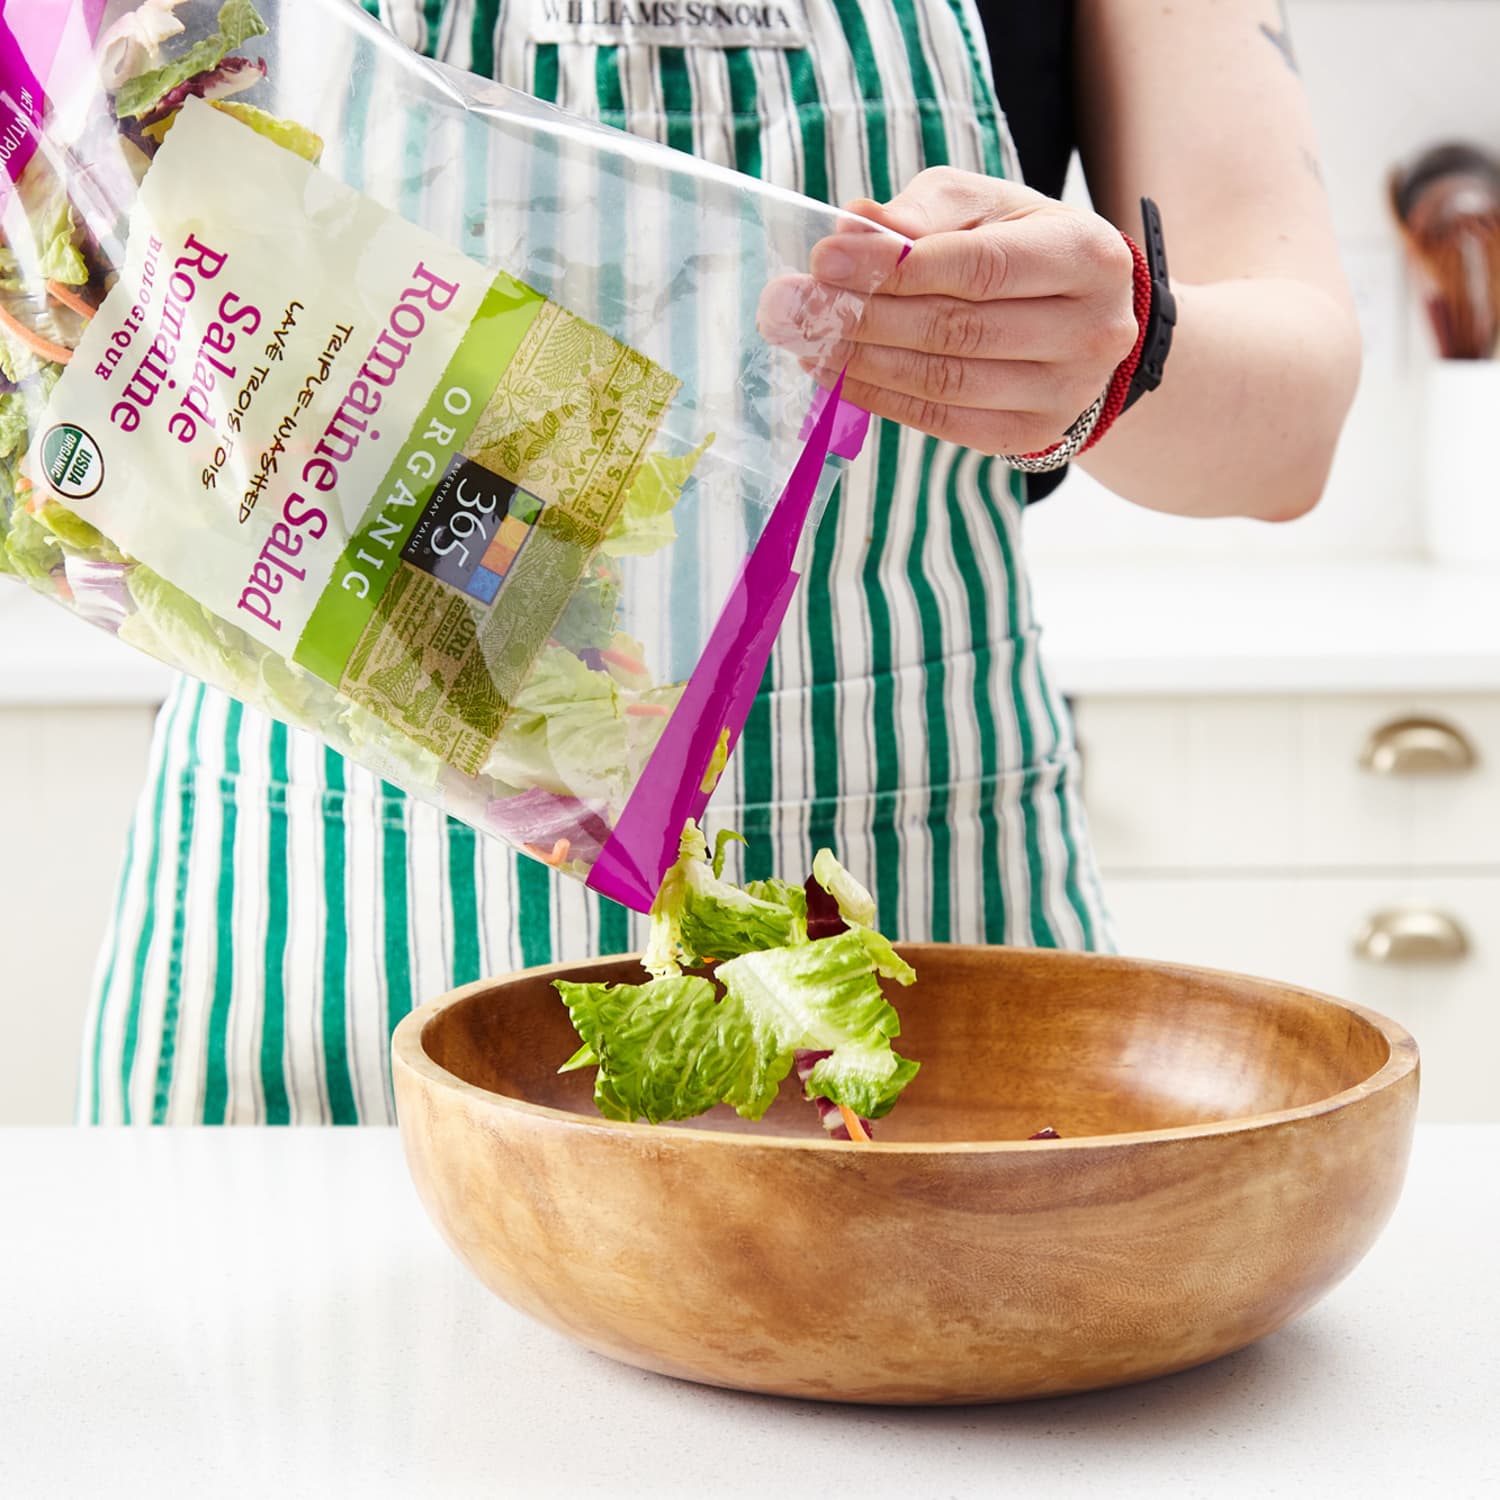 Produce - Packaged Chopped Salad Kit, Southwest at Whole Foods Market